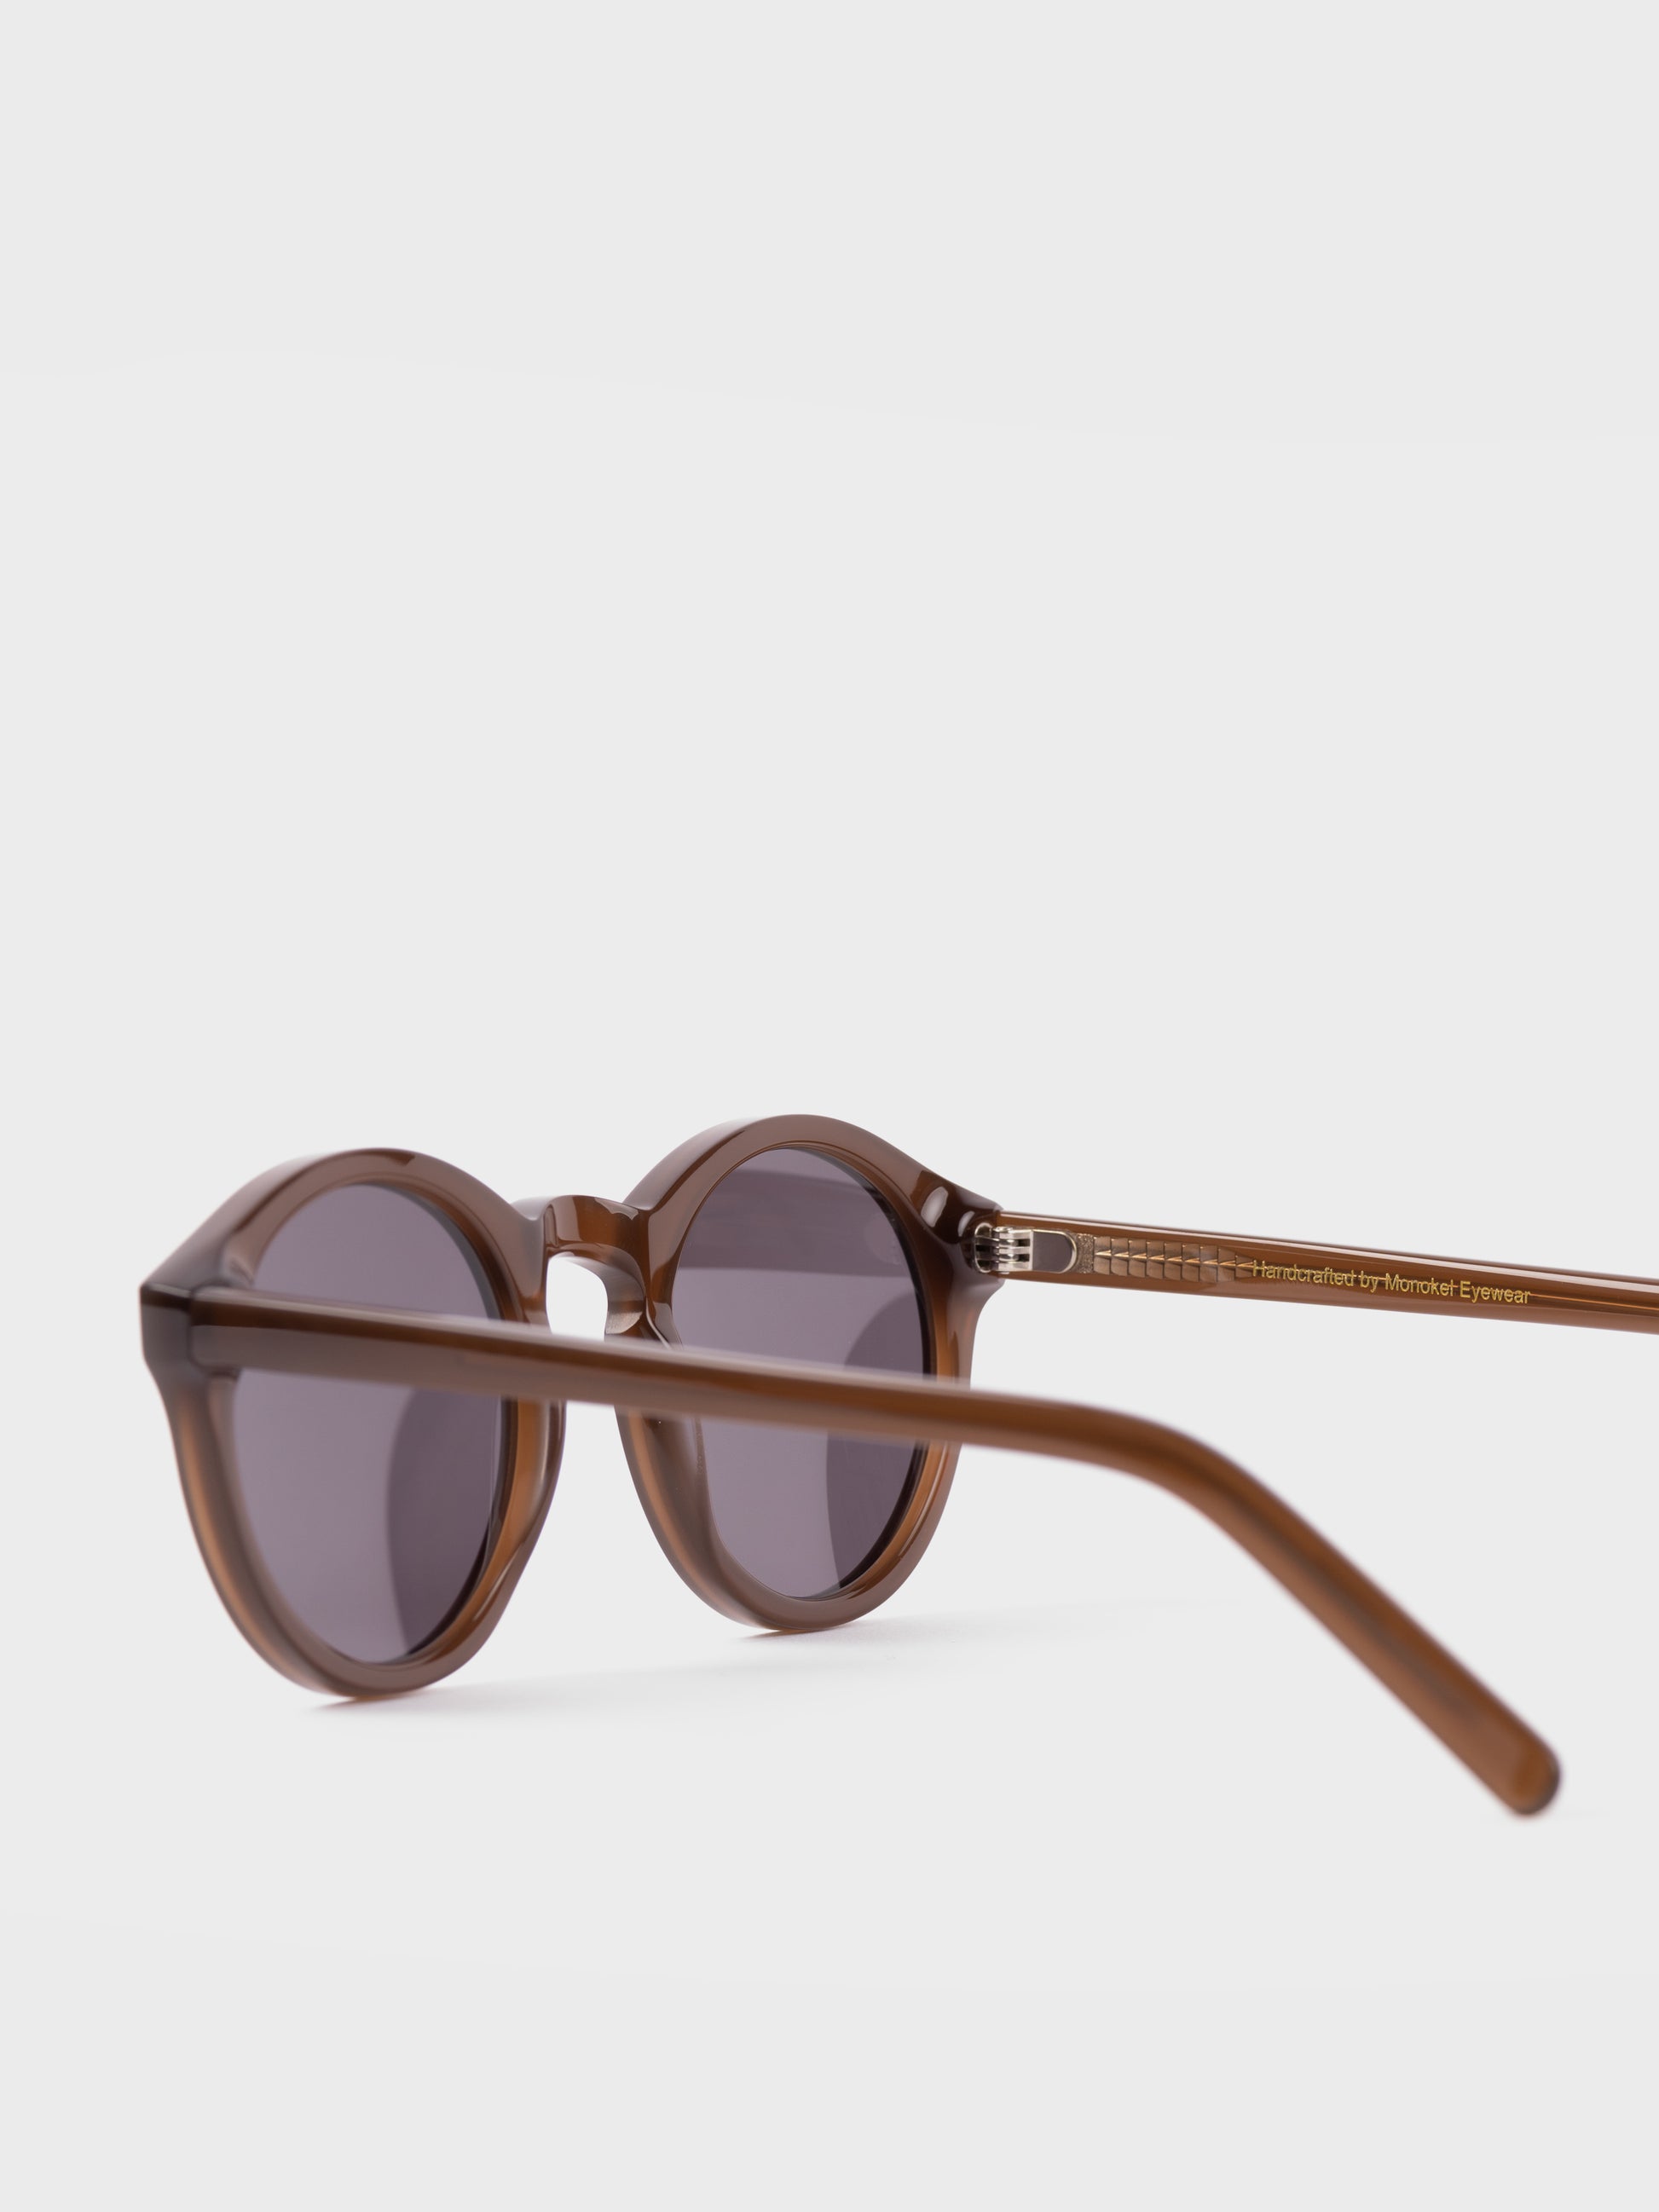 Monokel Sunglasses - Barstow Chocolate/Grey Lens